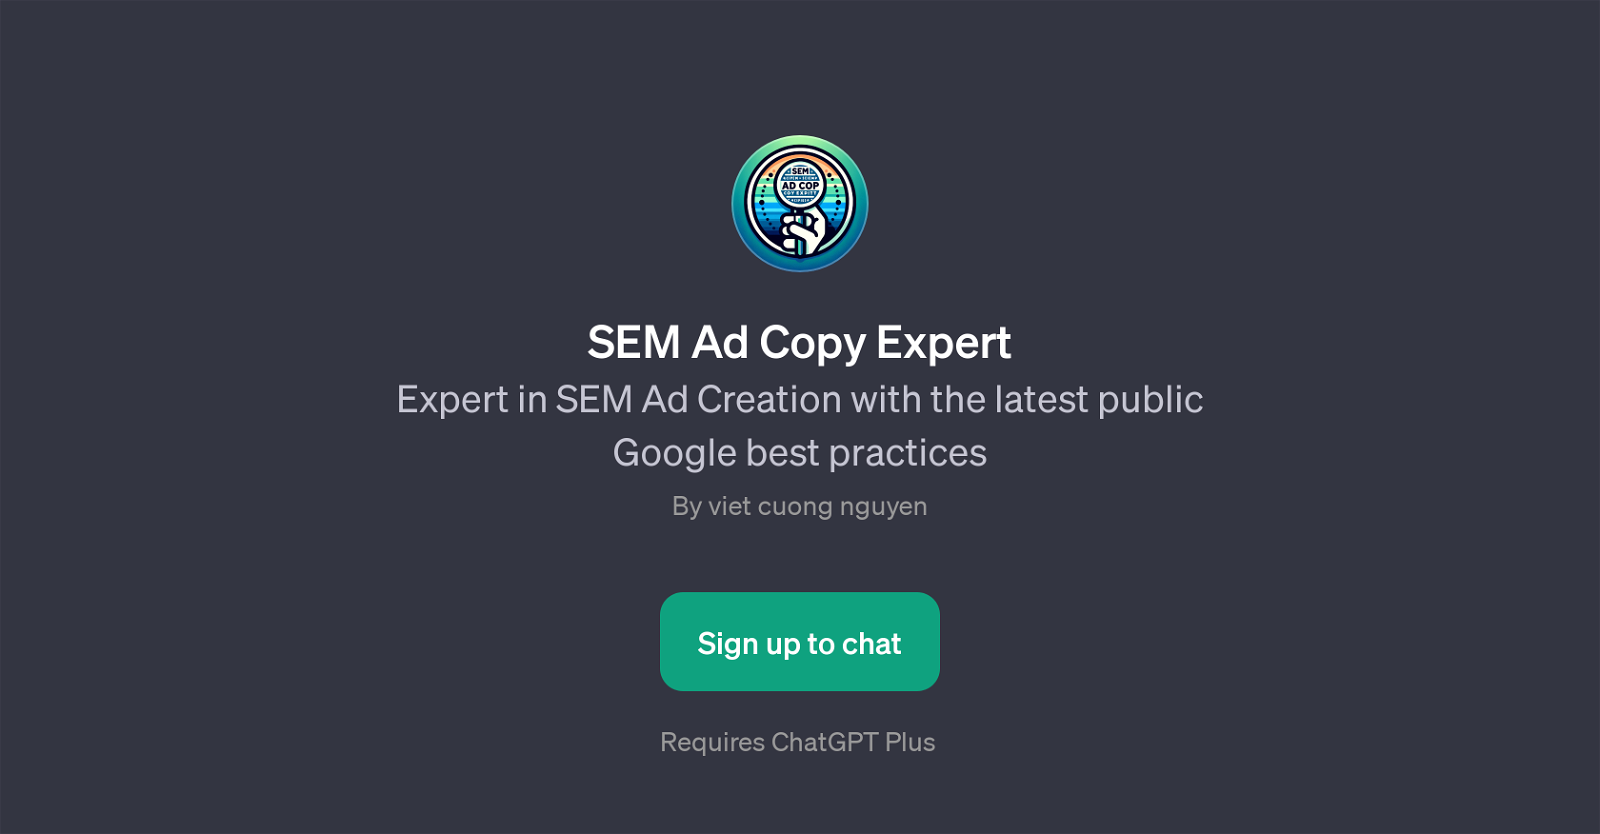 SEM Ad Copy Expert website